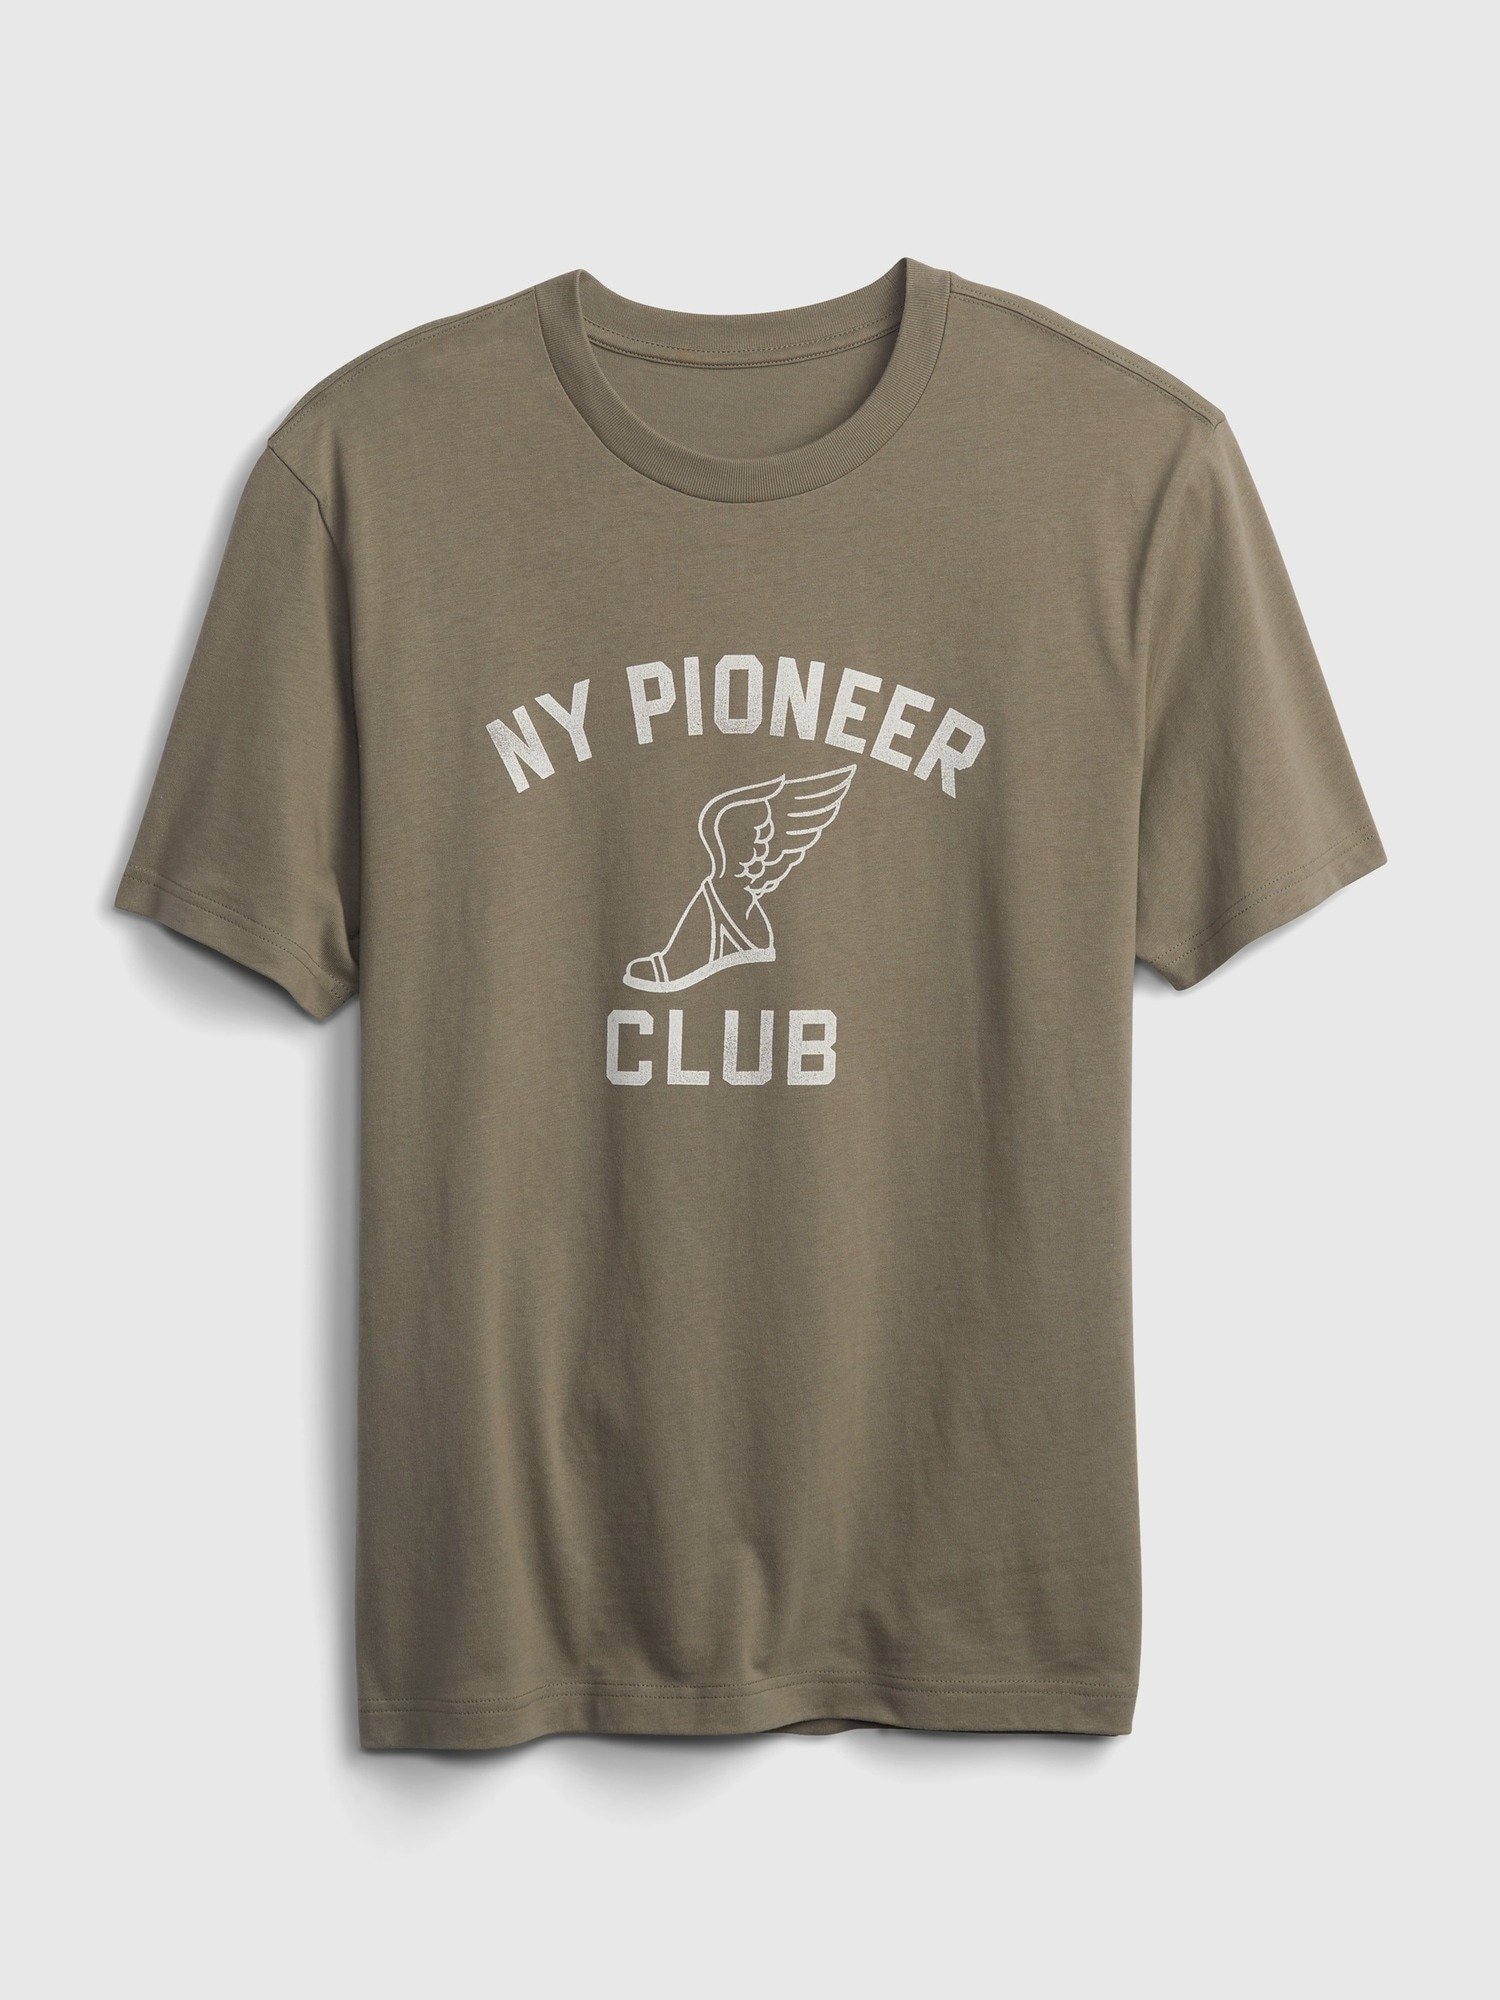 Gap x New York Pioneer Club Grafik Baskılı T-Shirt product image